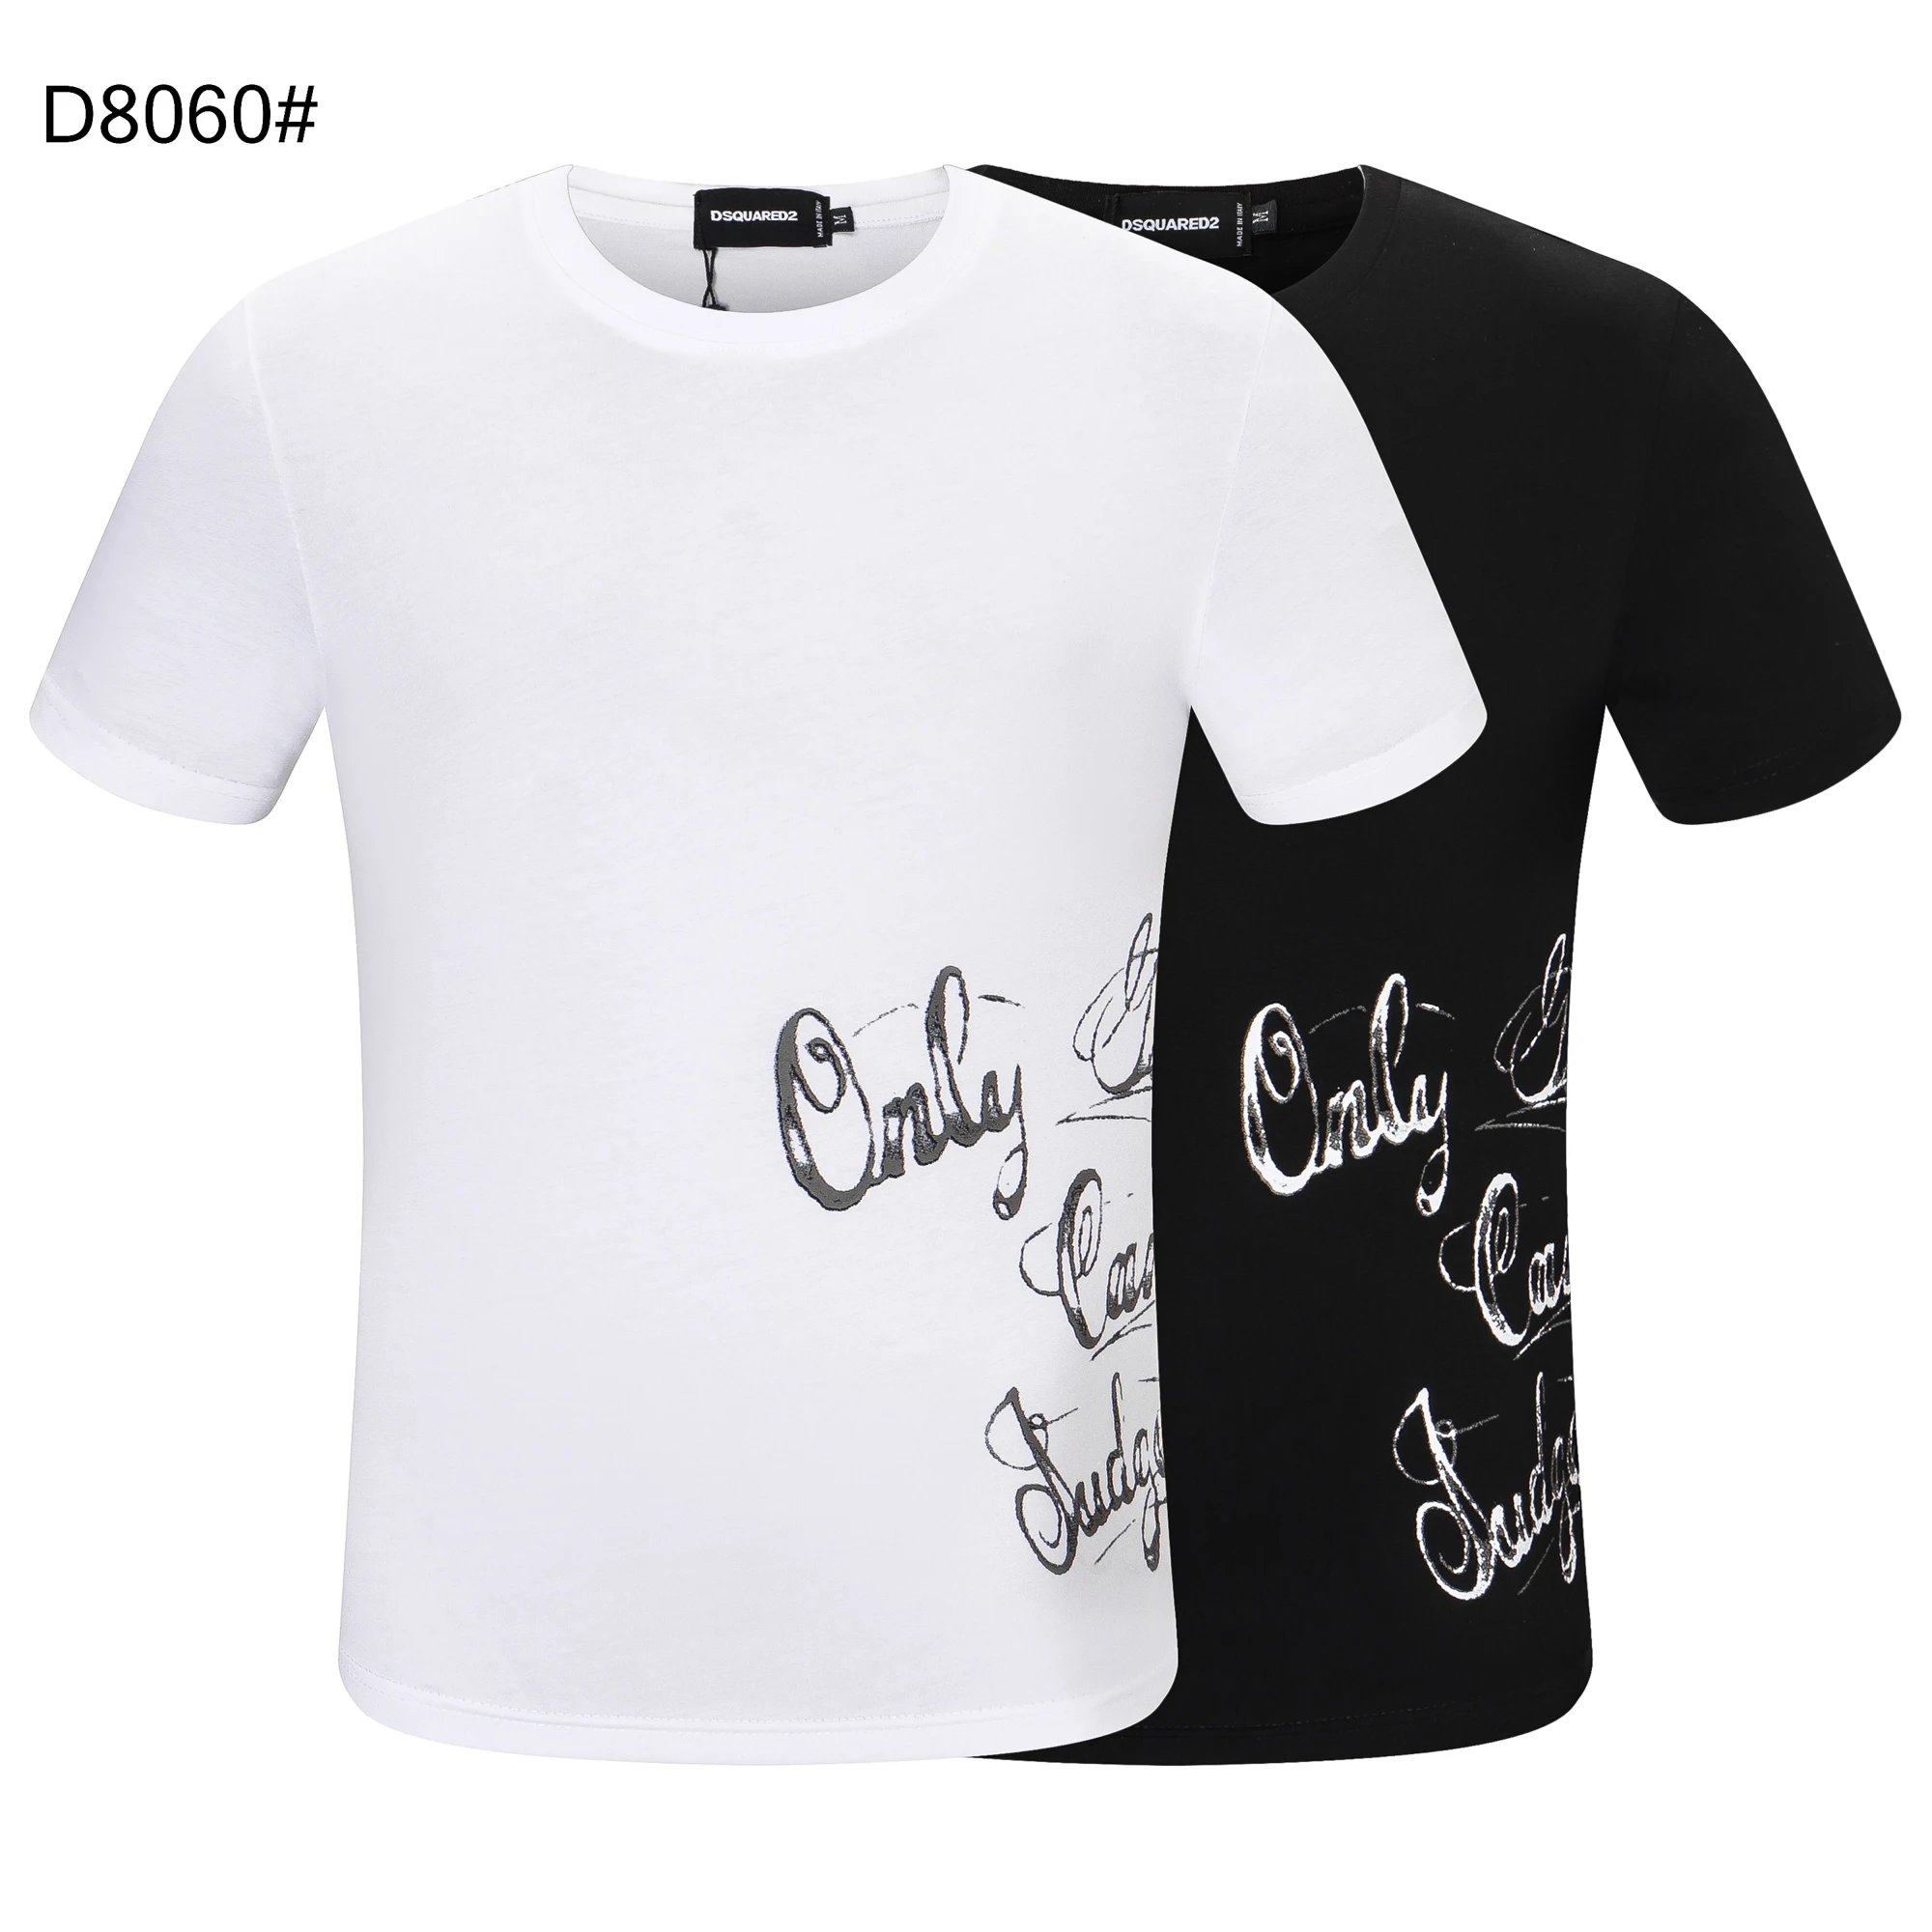 

Dsquared2 Summer New Men/Women 100% Cotton Casual Fashion Trend Dsq2 Letter Crew Neck T-Shirt D2 Short Sleeve Friend Gift D8060